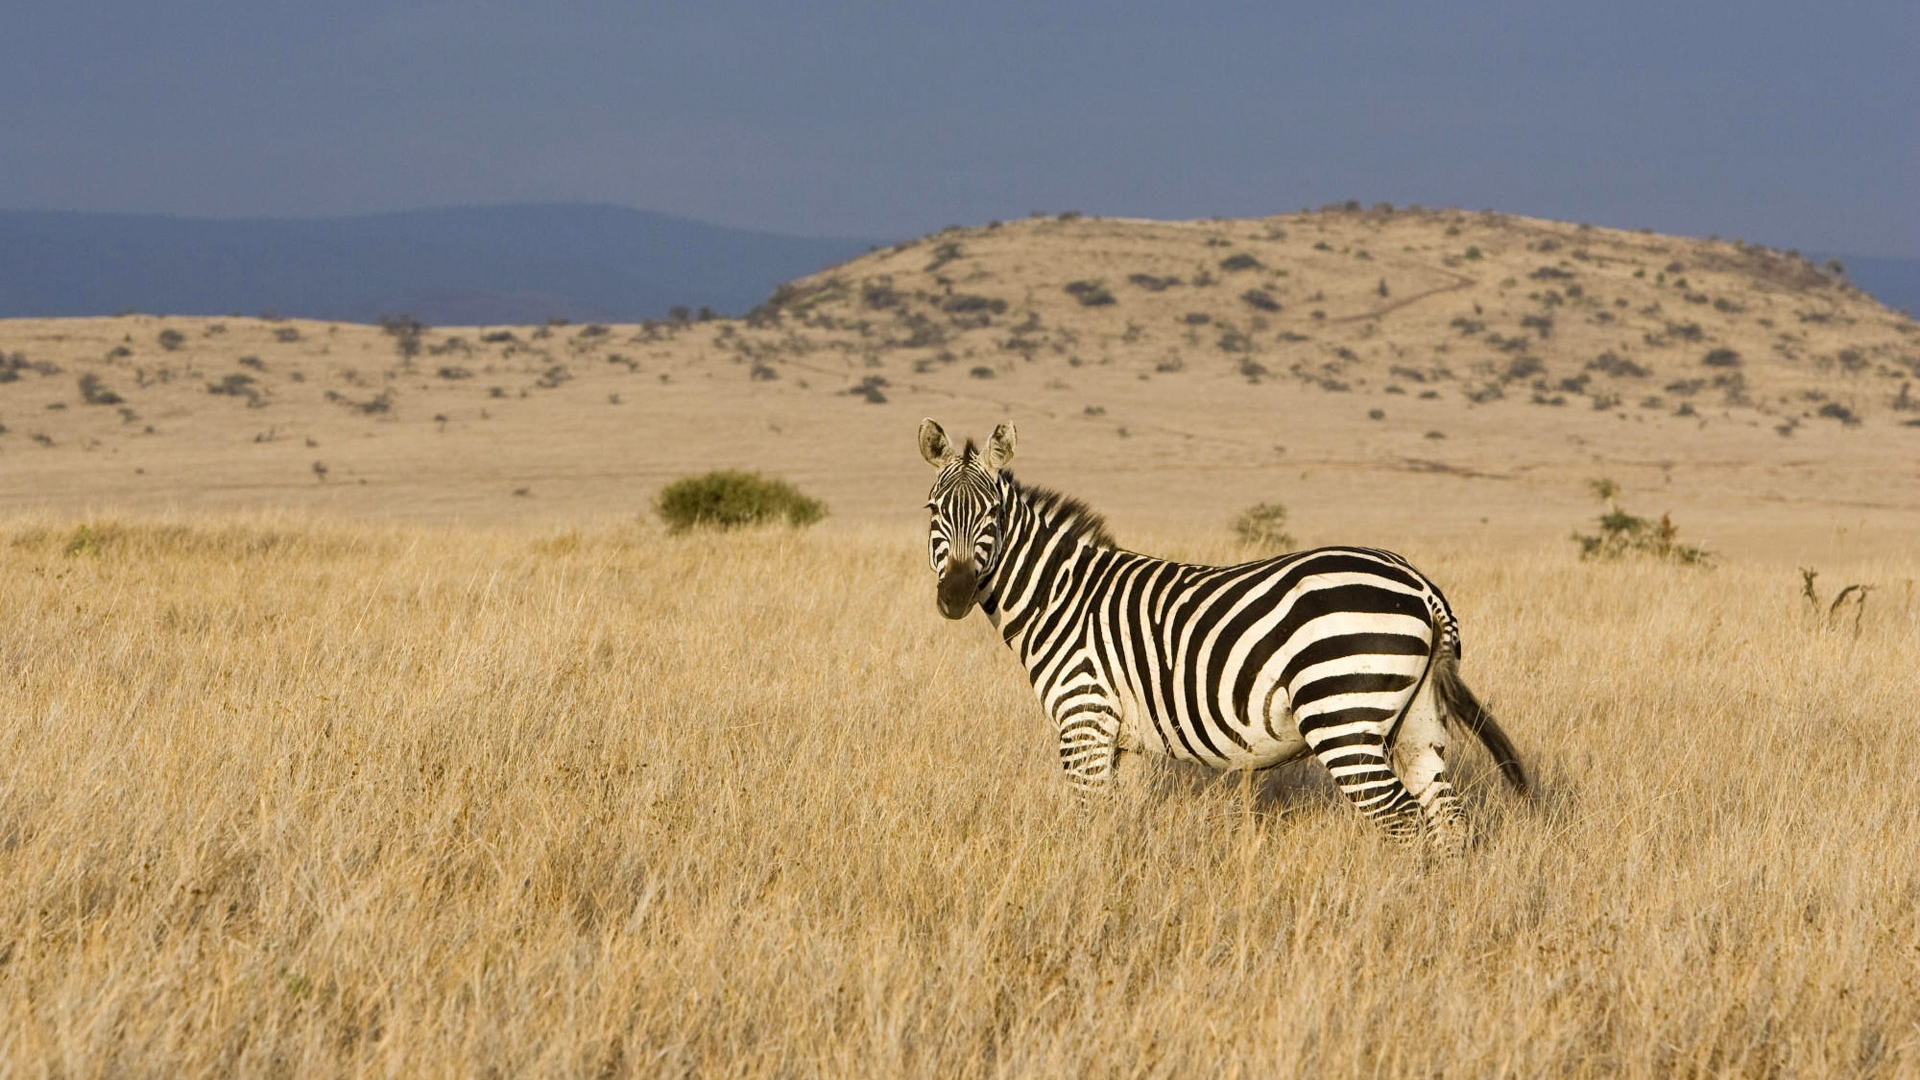 Free Download Zebra Wallpaper Hd - Grassland Wallpaper With Animals - HD Wallpaper 